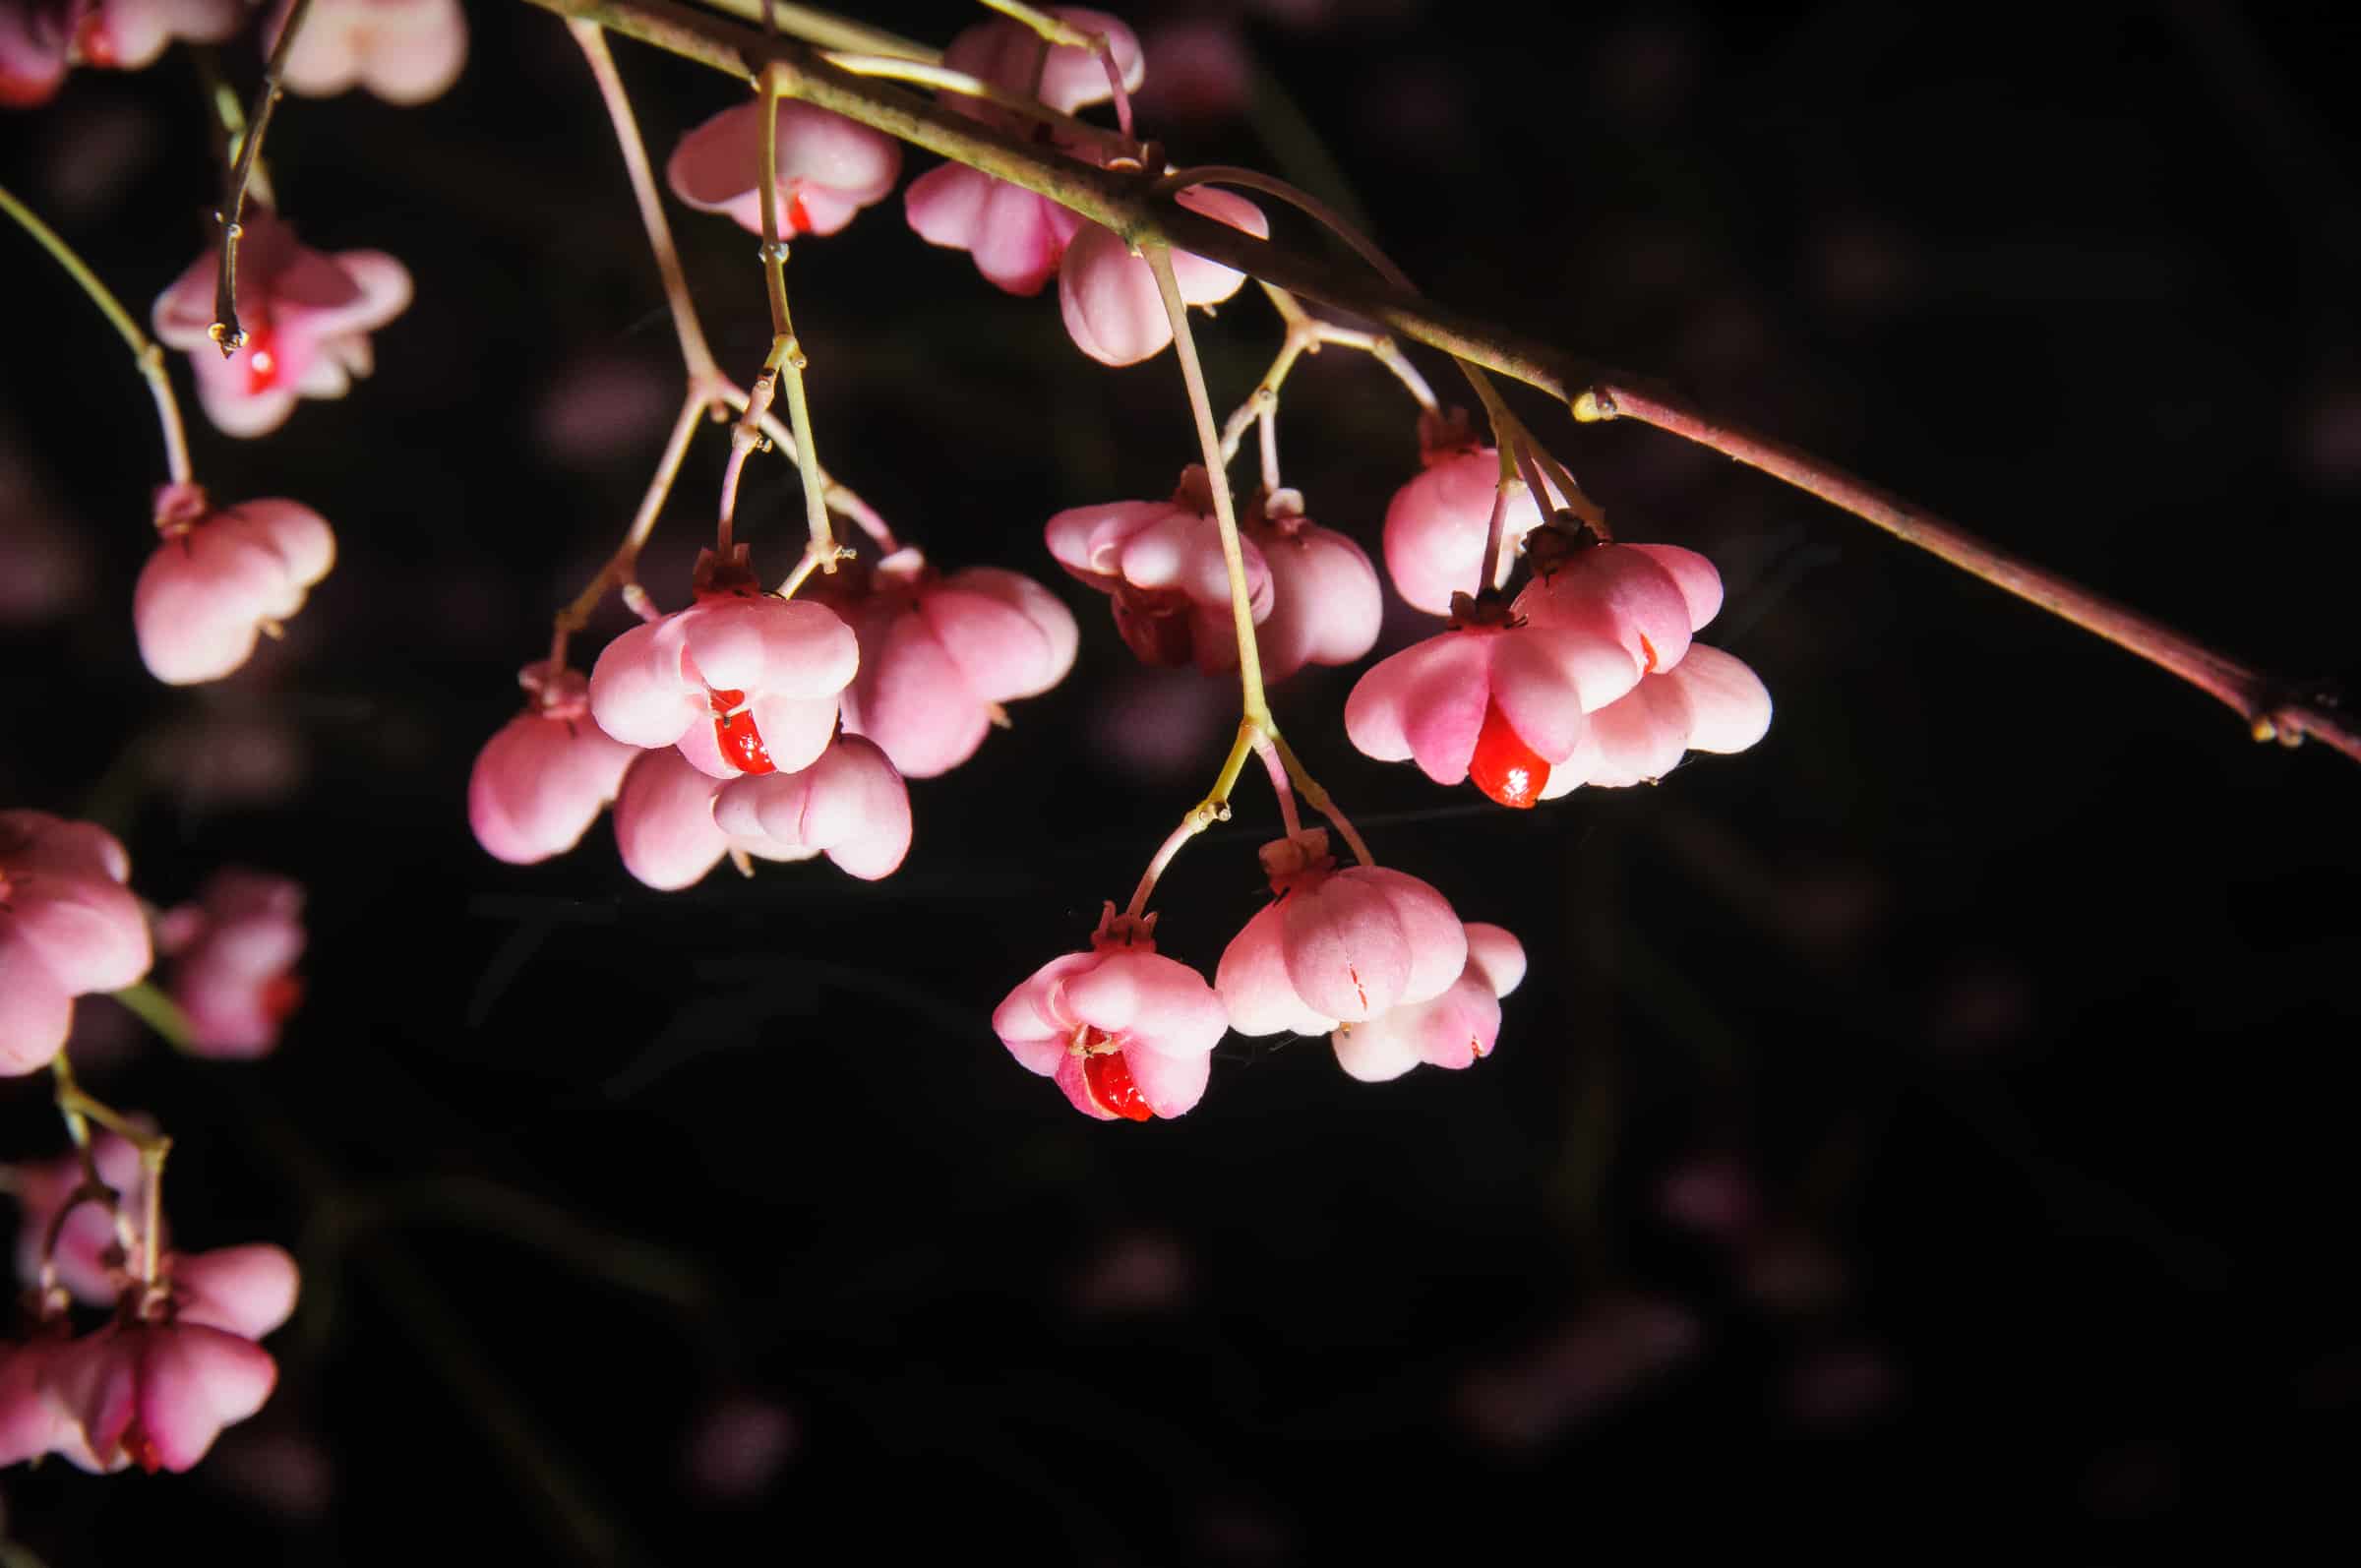 Euonymus europaeus pink berries ripen and break open revealing a red berry inside. Located in Johnson Lake State Recreational Area, Nebraska. Nebraska's fall landscapes